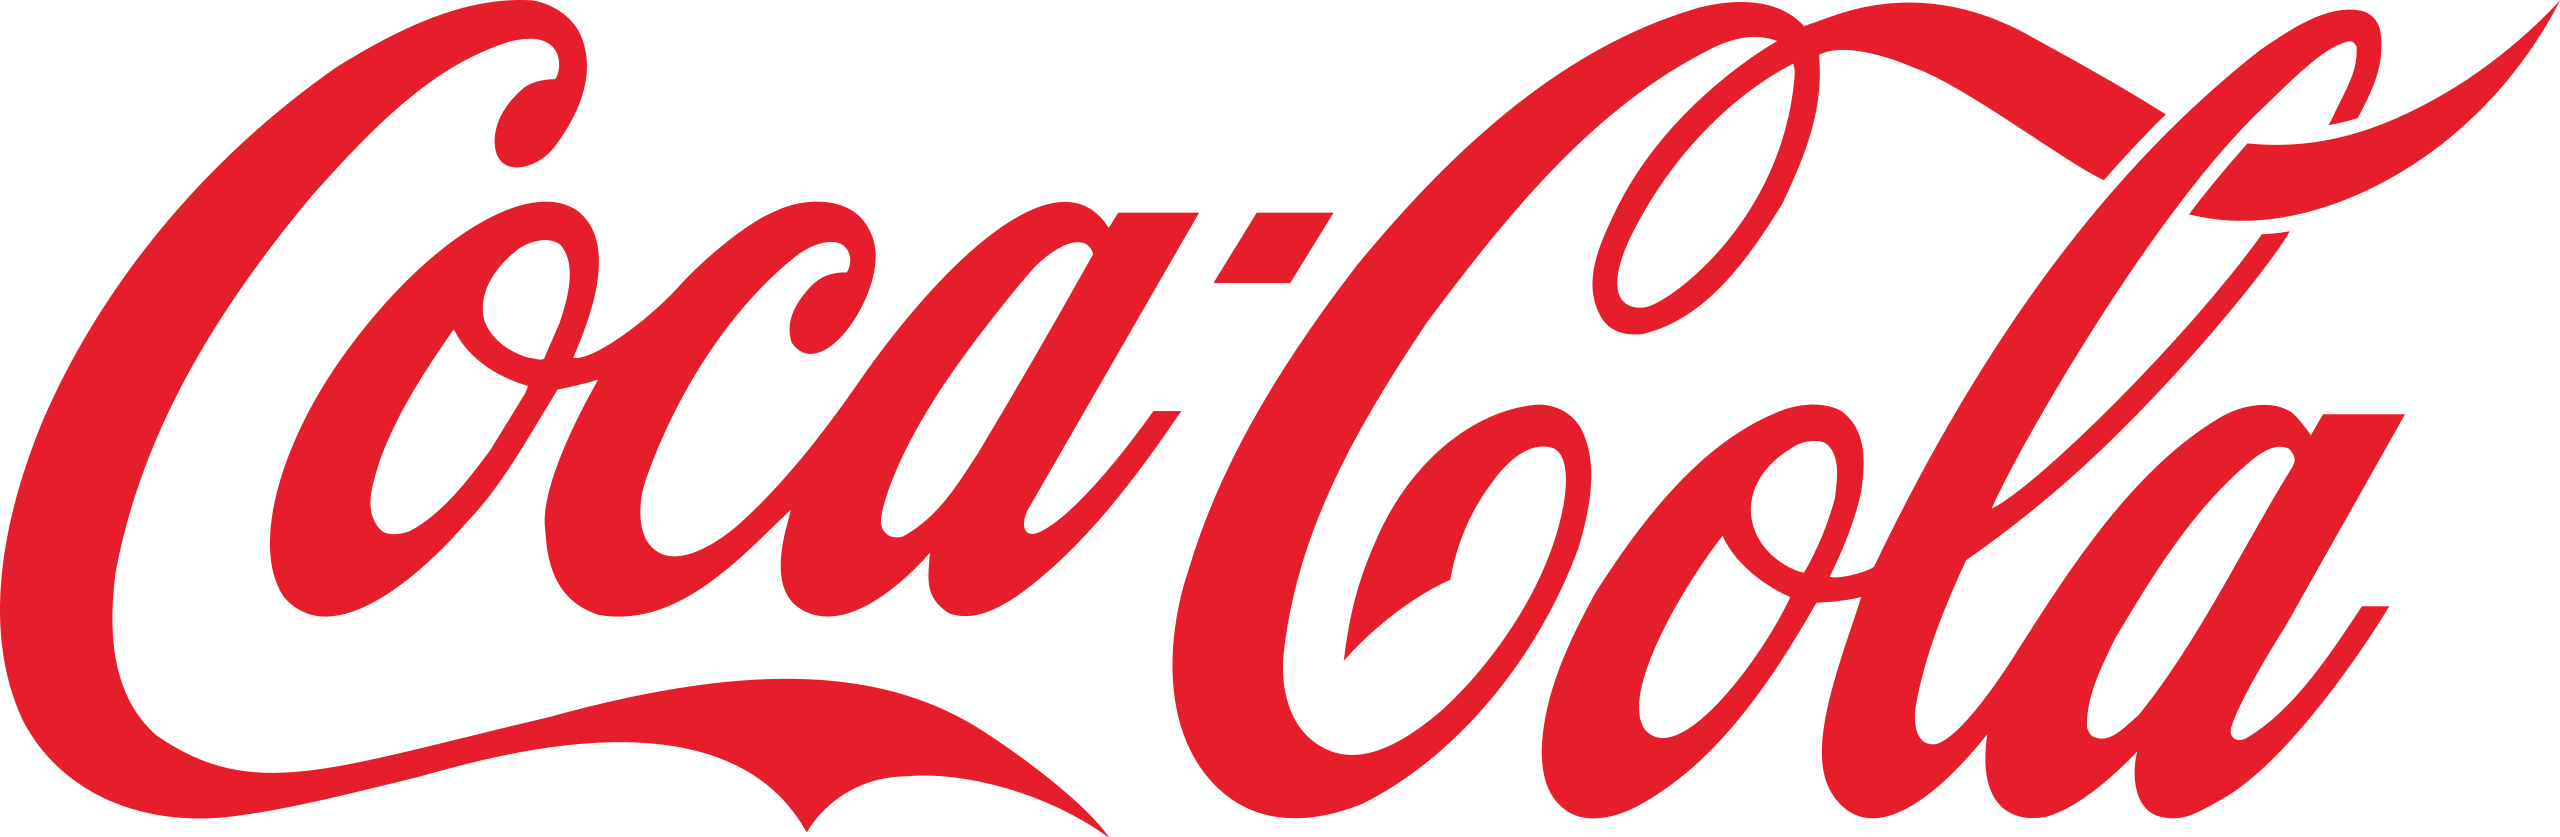 Coca-Cola logo png Blank Meme Template